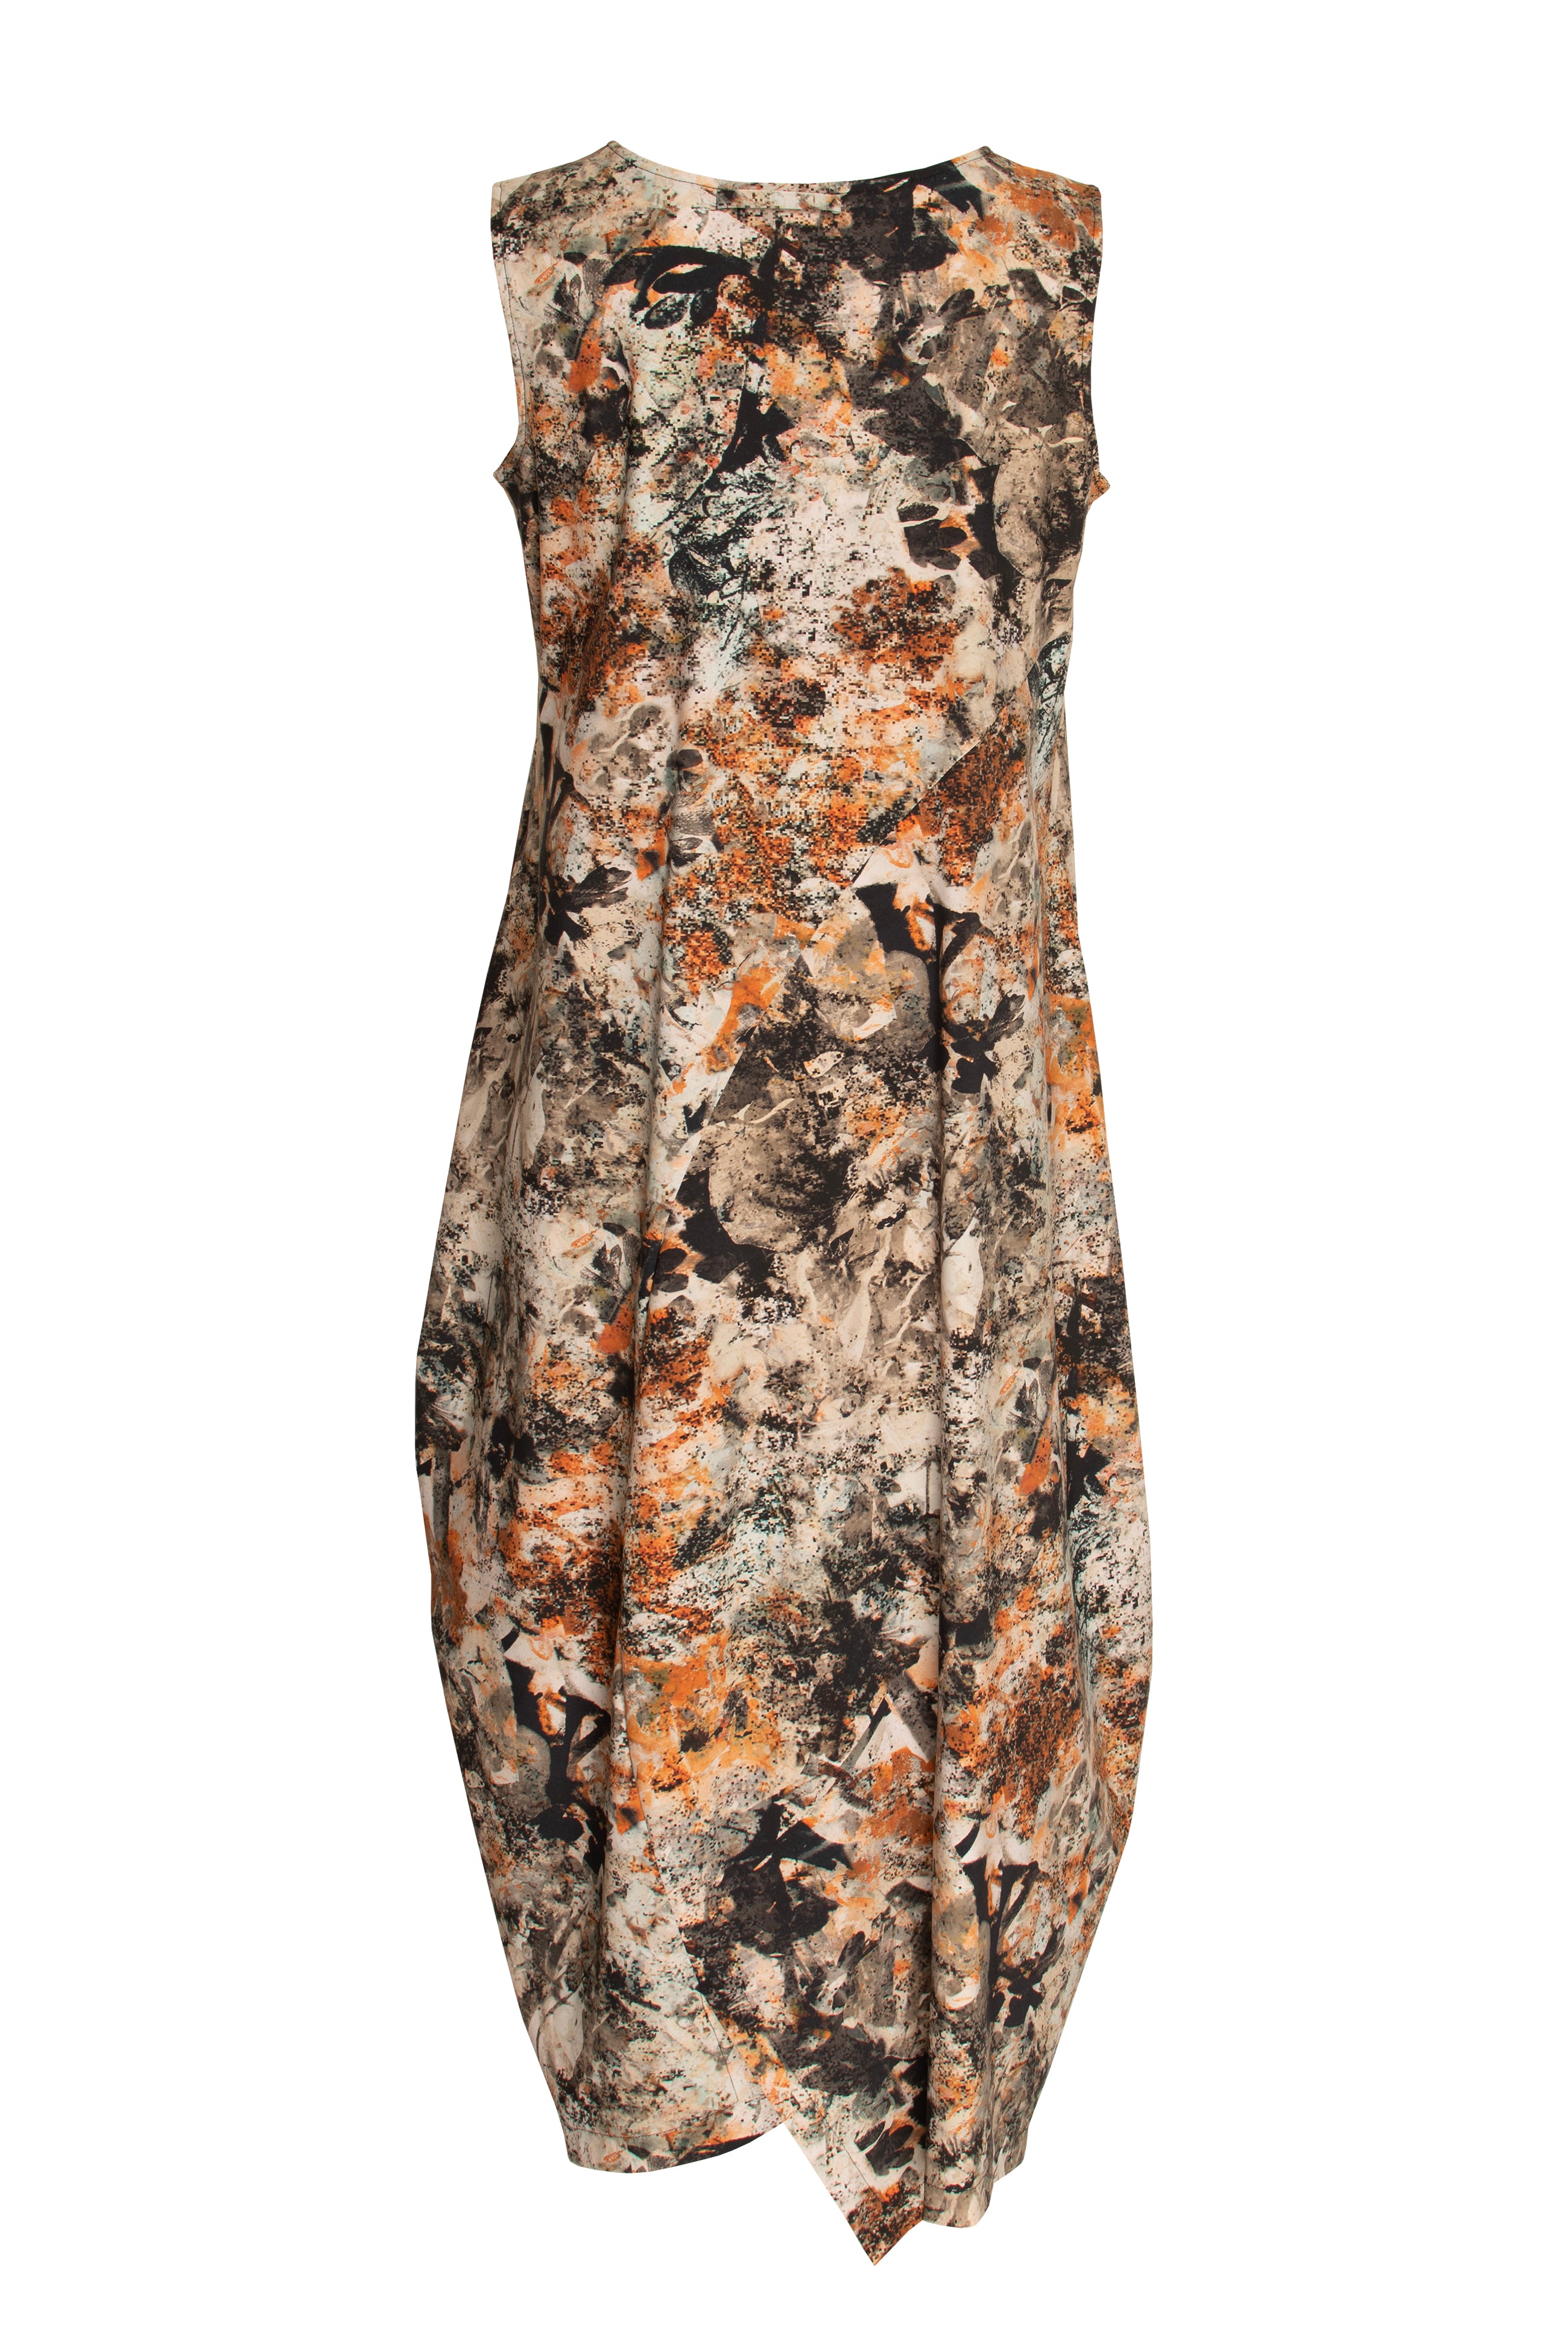 Asymmetric Panel Singlet Dress - Scatter Print Jersey 6072